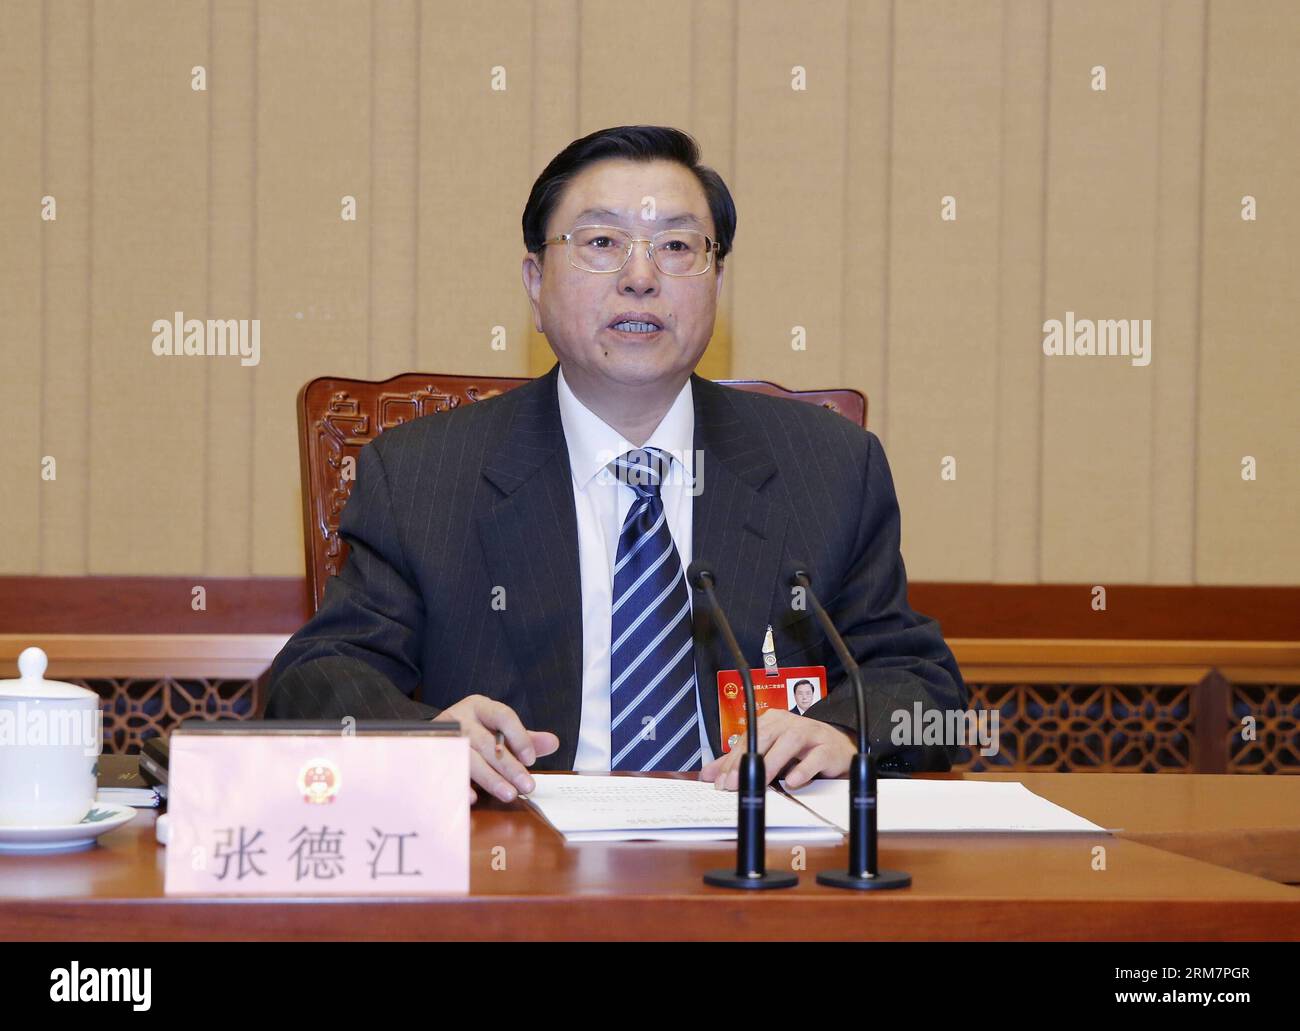 (140312) -- PEKING, 12. März 2014 (Xinhua) -- Zhang Dejiang, Exekutivvorsitzender des Präsidiums der zweiten Sitzung des 12. Nationalen Volkskongresses (NPC), leitet die vierte Präsidiumssitzung in der Großen Halle des Volkes in Peking, Hauptstadt Chinas, am 12. März 2014. (Xinhua/Ju Peng) (zkr) (ZWEI SITZUNGEN) CHINA-BEIJING-NPC-PRESIDIUM-MEETING (CN) PUBLICATIONxNOTxINxCHN Peking 12. März 2014 XINHUA Zhang Dejiang Exekutivvorsitzender Person des Präsidiums der zweiten Sitzung des 12. Nationalen Prominenten S Kongress NPC Vorsitzender der 4. Präsidiumssitzung Stockfoto